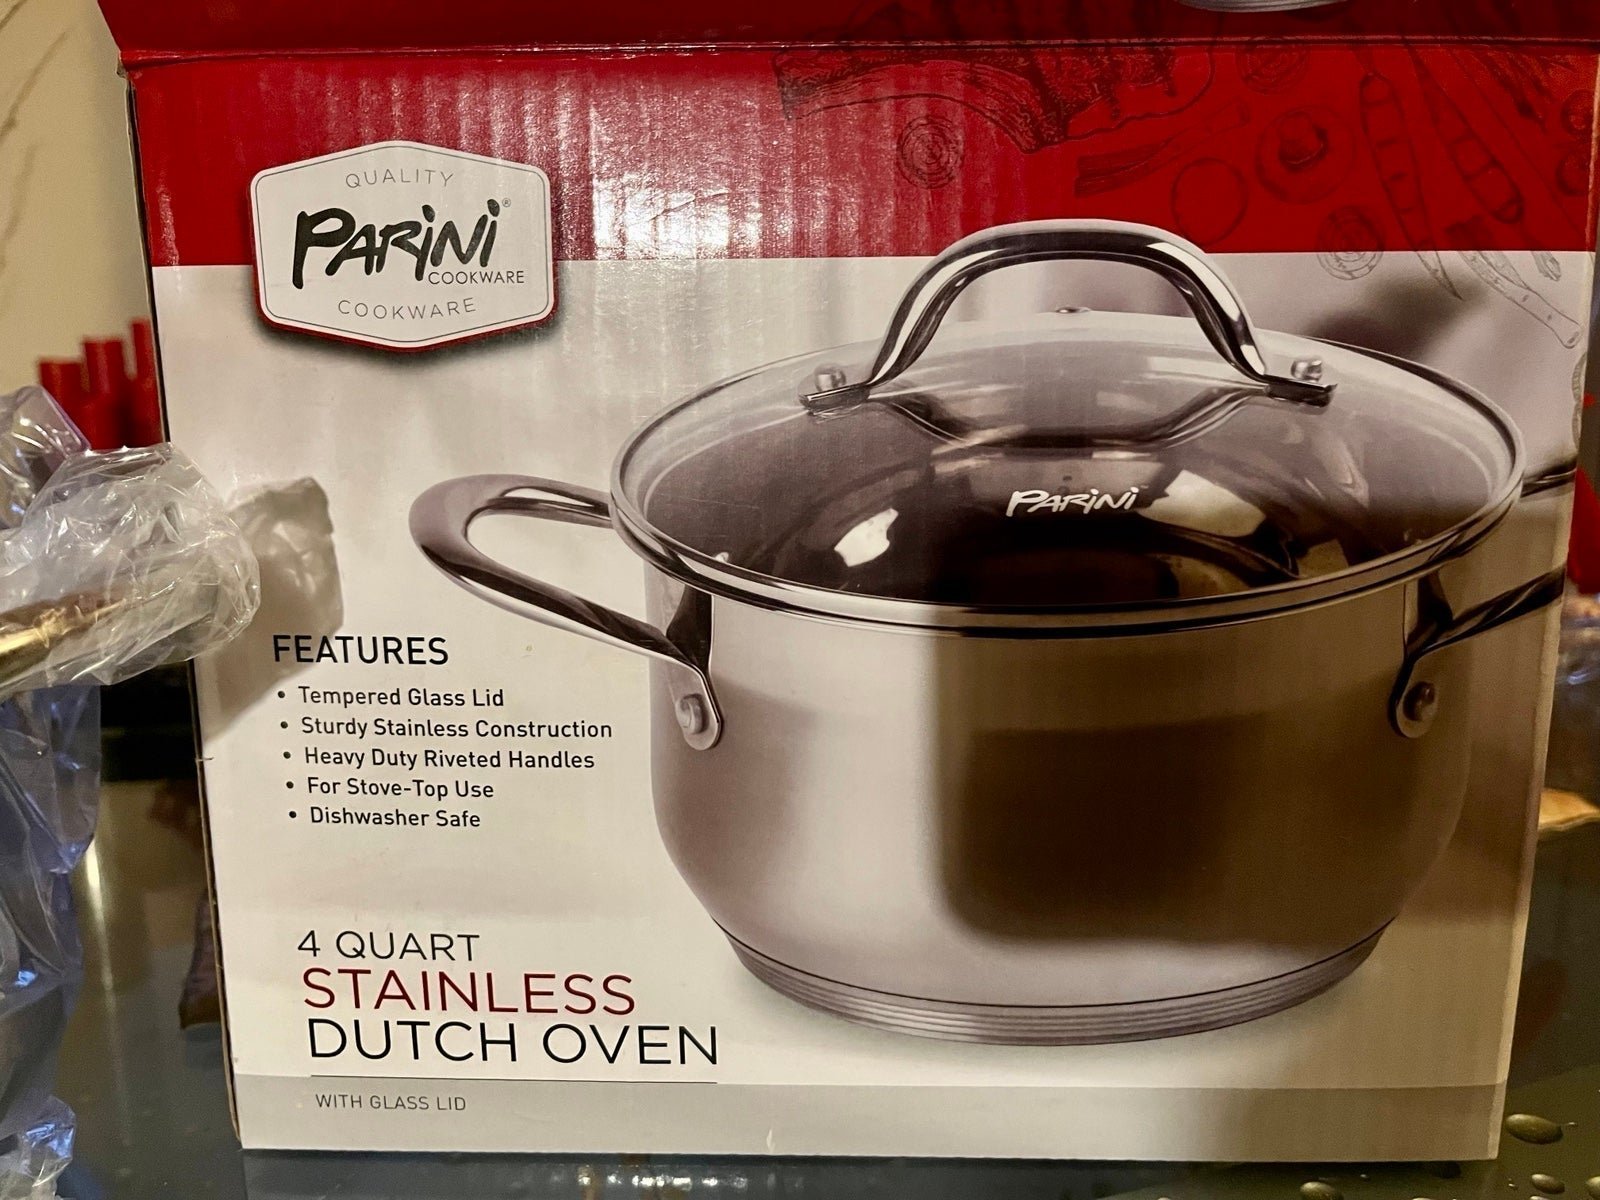 Parini stainless Dutch oven QaKAHJeMn